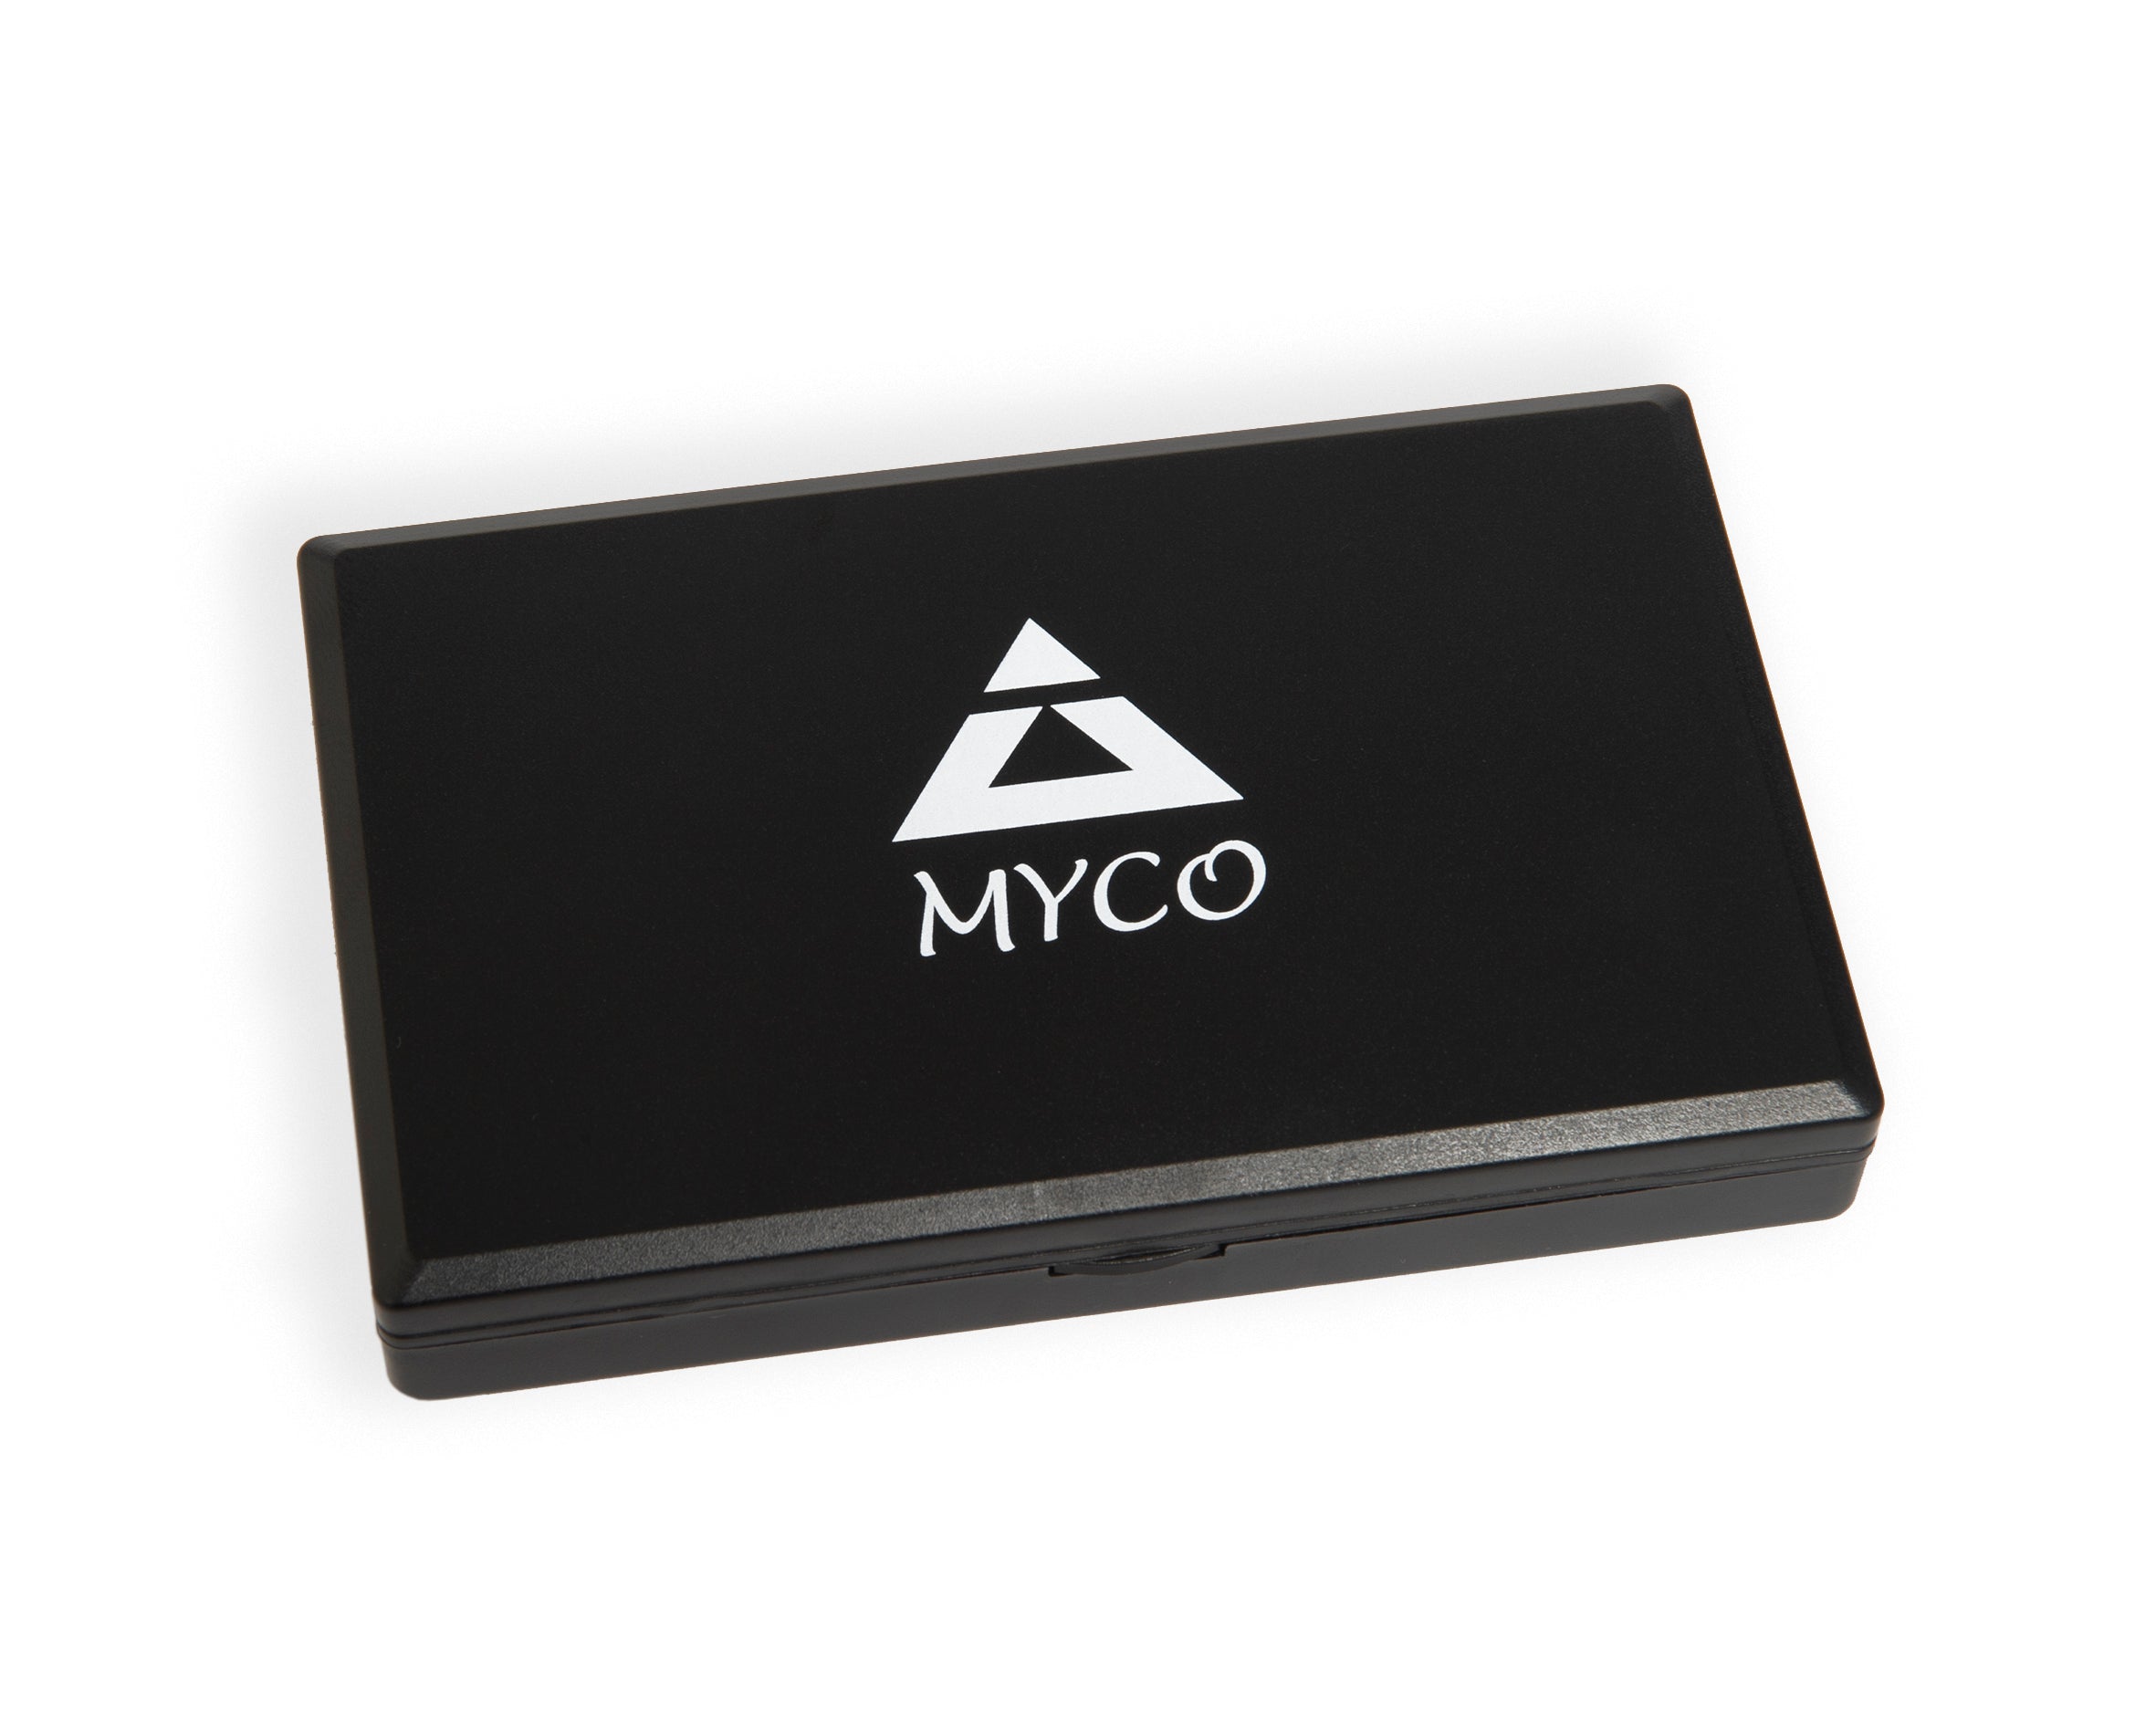 MMZ-100 Myco Mini MZ-Series Miniscale 100g x 0.01g